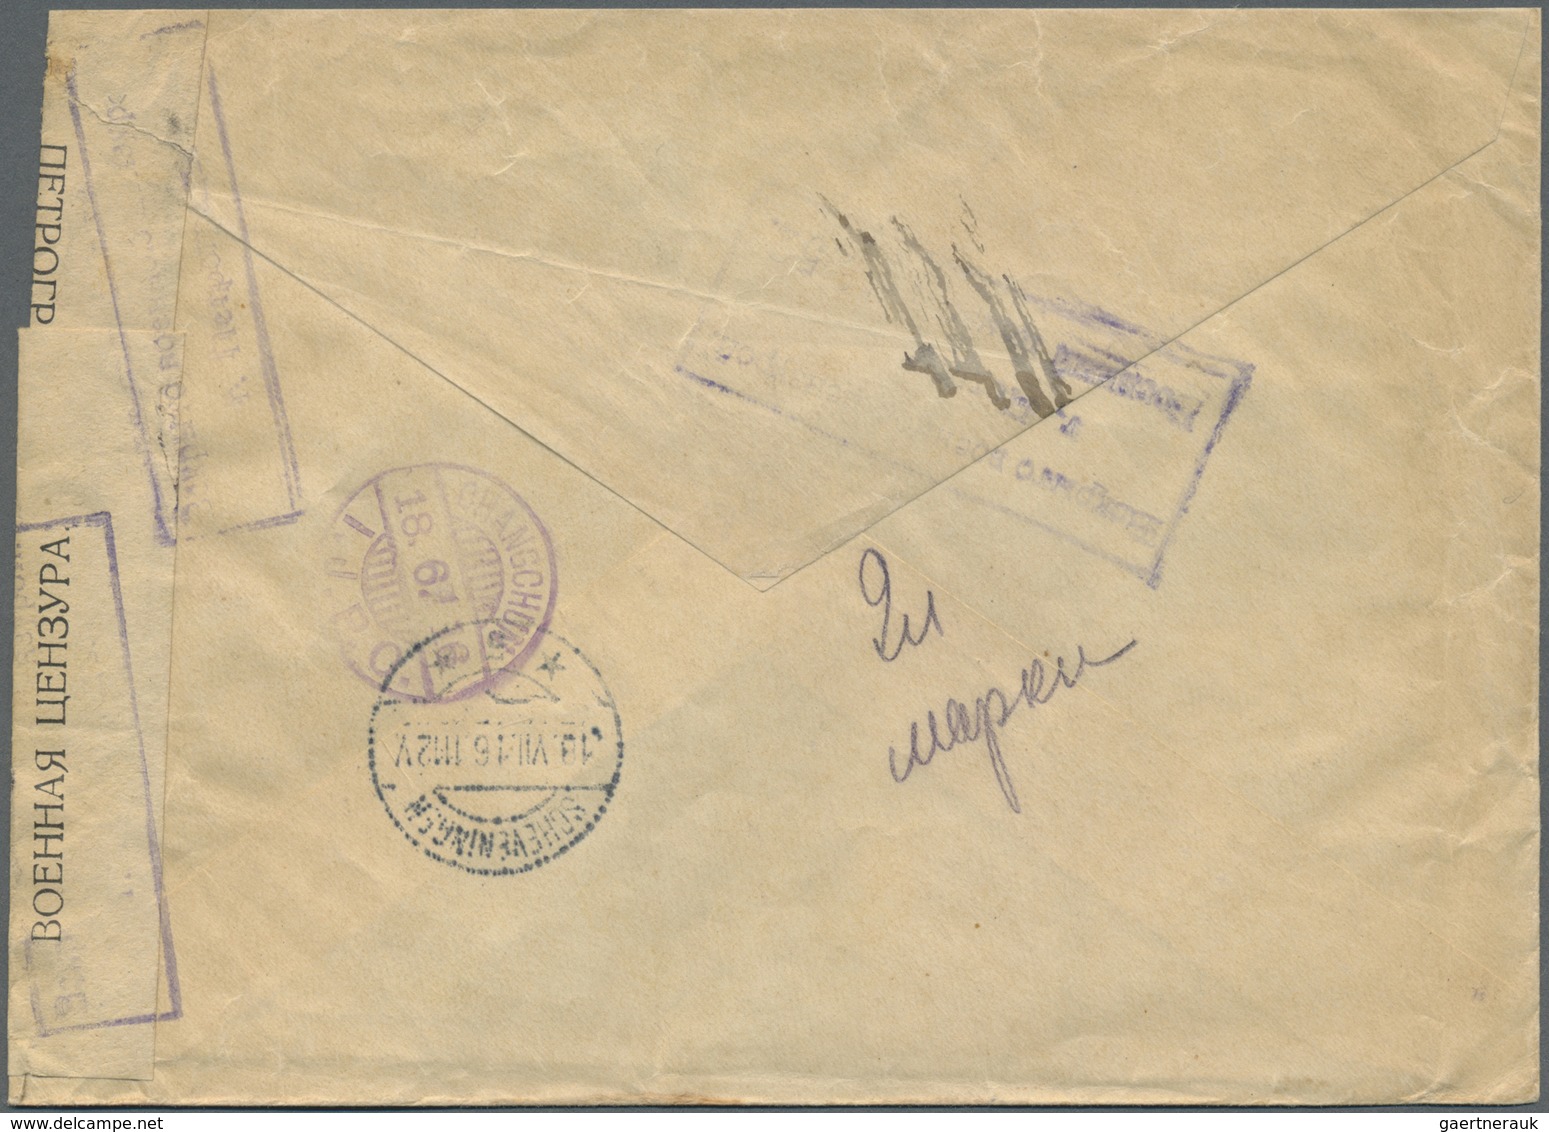 Br Japanische Post In China: 1916. Registered Envelope Addressed To Holland Bearing Japanese Post Offic - 1943-45 Shanghai & Nankin